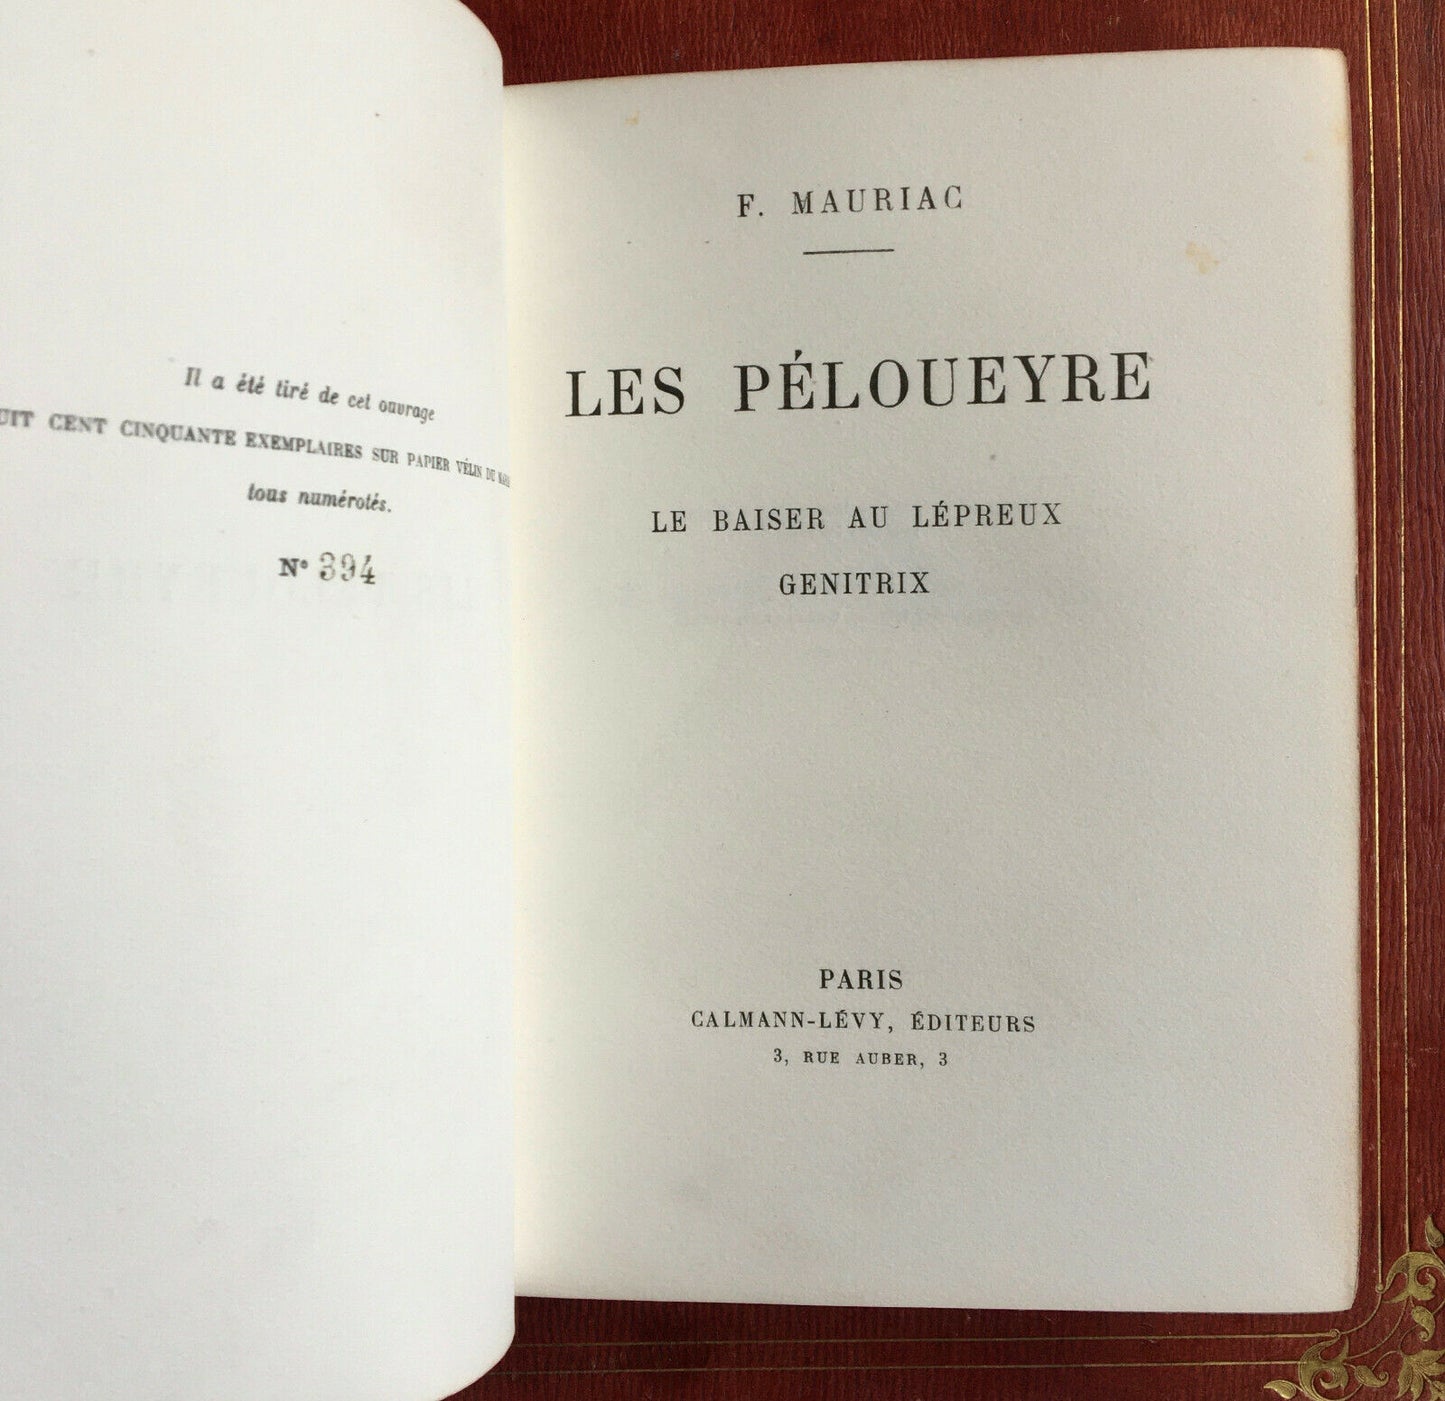 François Mauriac — Les Péloueyre: Le Baiser au leper &amp; Genitrix — numbered copy on marsh vellum — Calmann-Lévy — 1925.